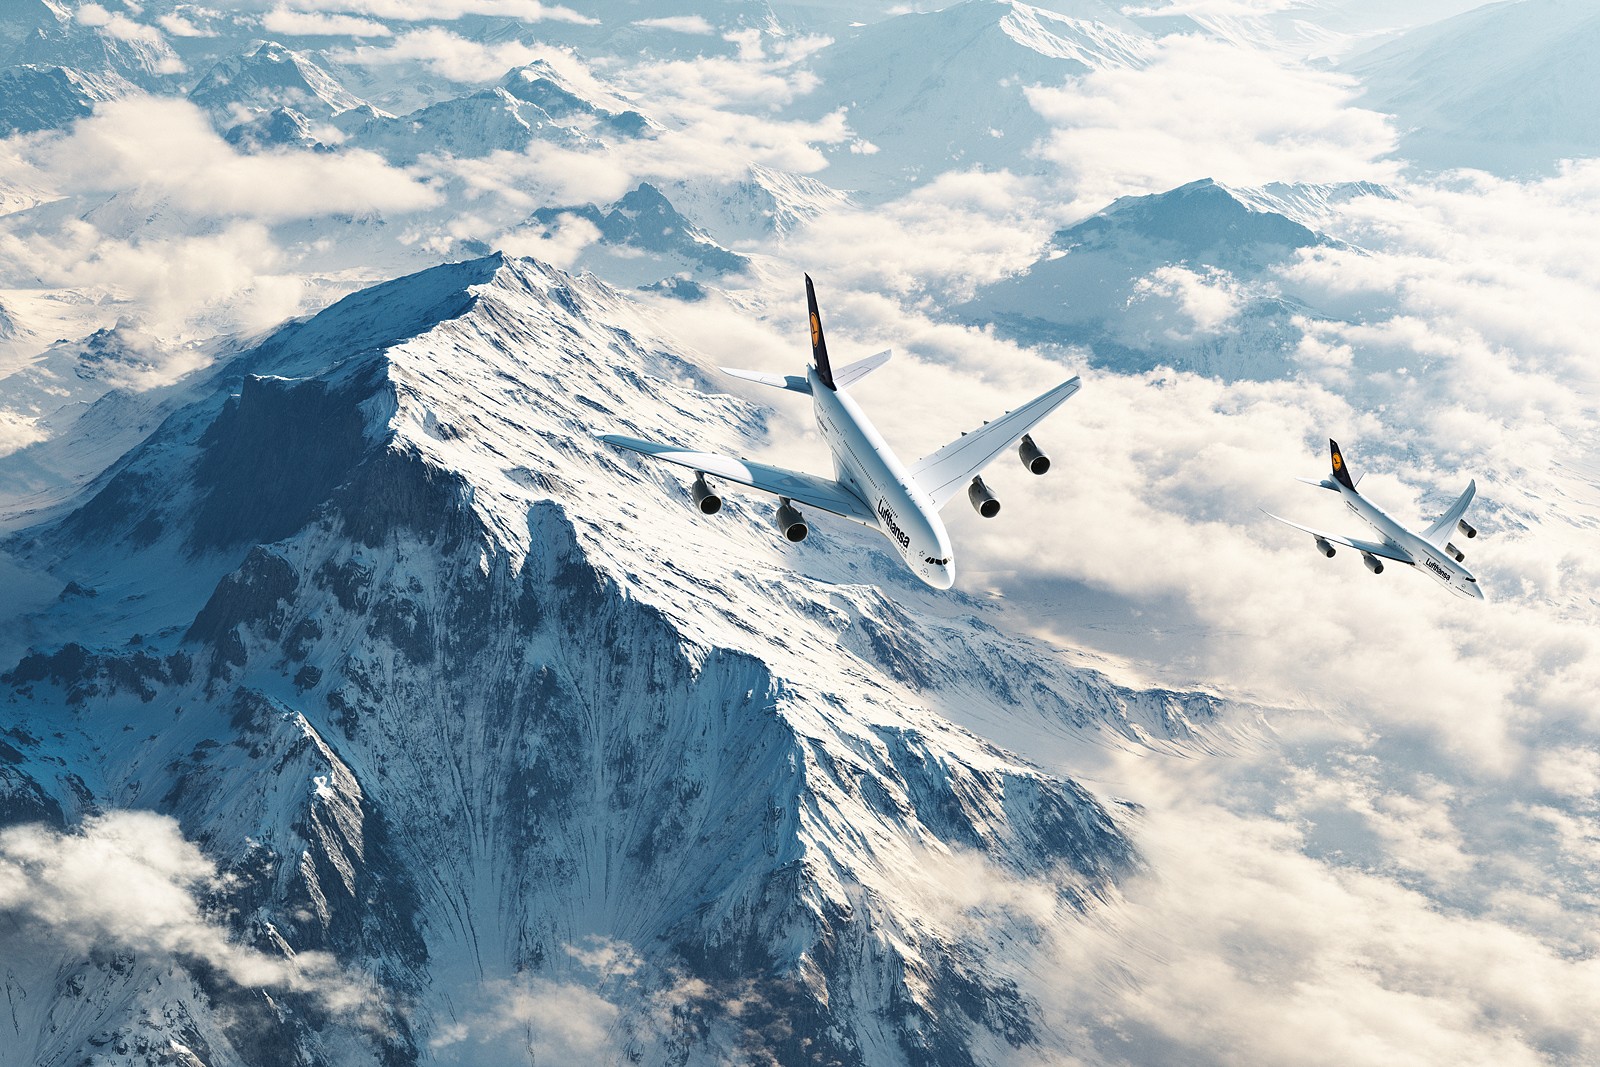 General 1600x1067 Airbus A380 airplane mountains vehicle passenger aircraft snowy peak landscape Lufthansa